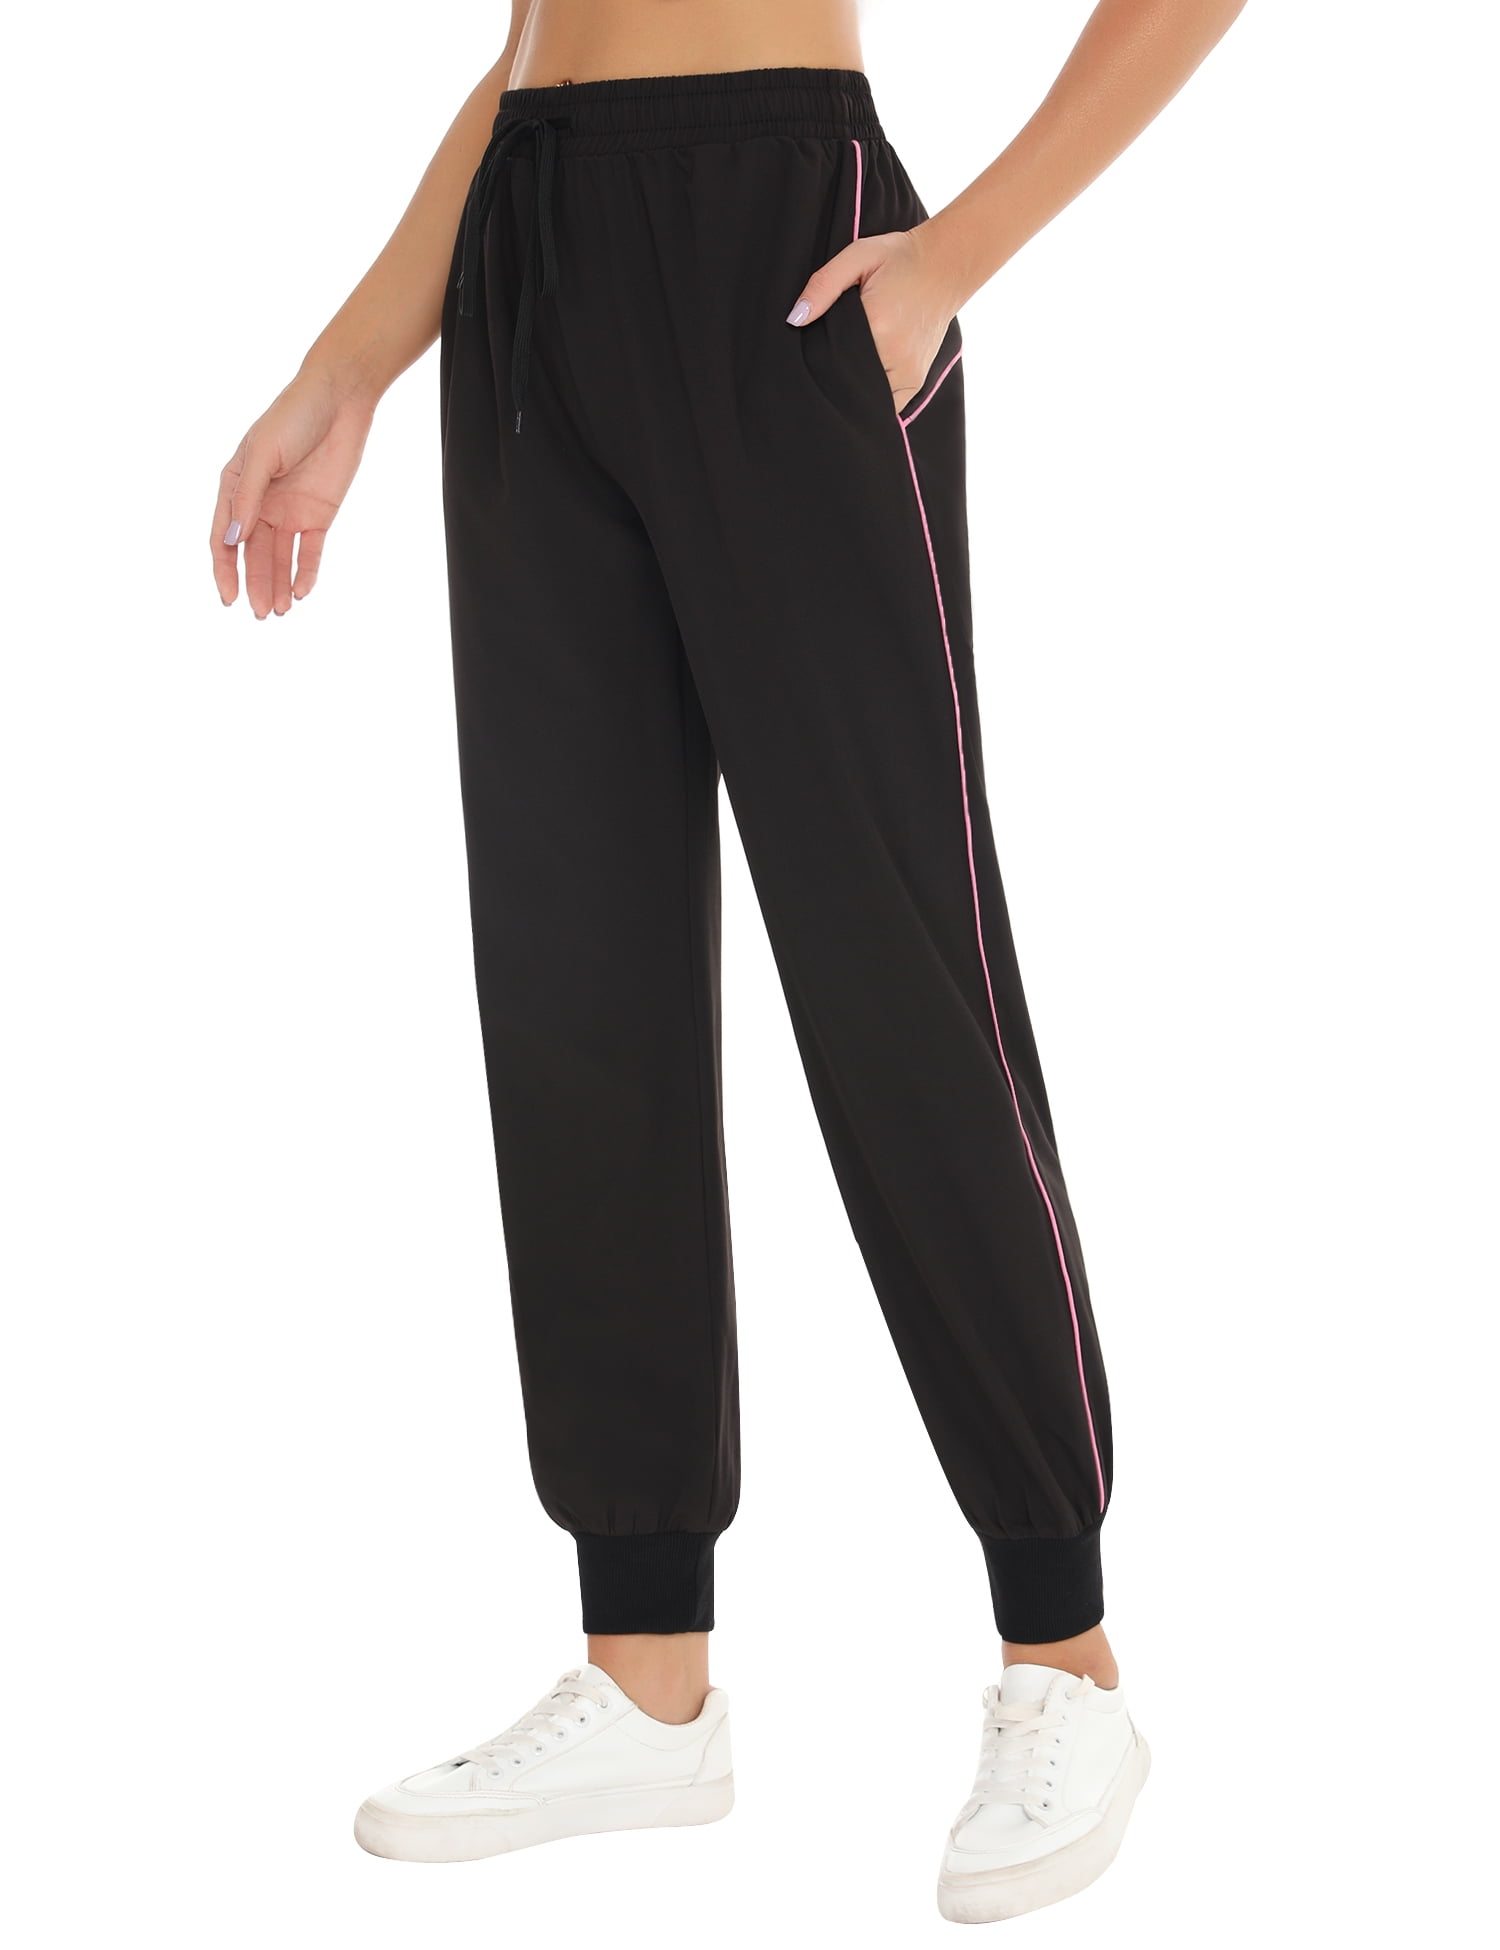 Uniexcosm Women's Printed Solid Activewear Jogger Track Cuff Sweatpants -  Walmart.com